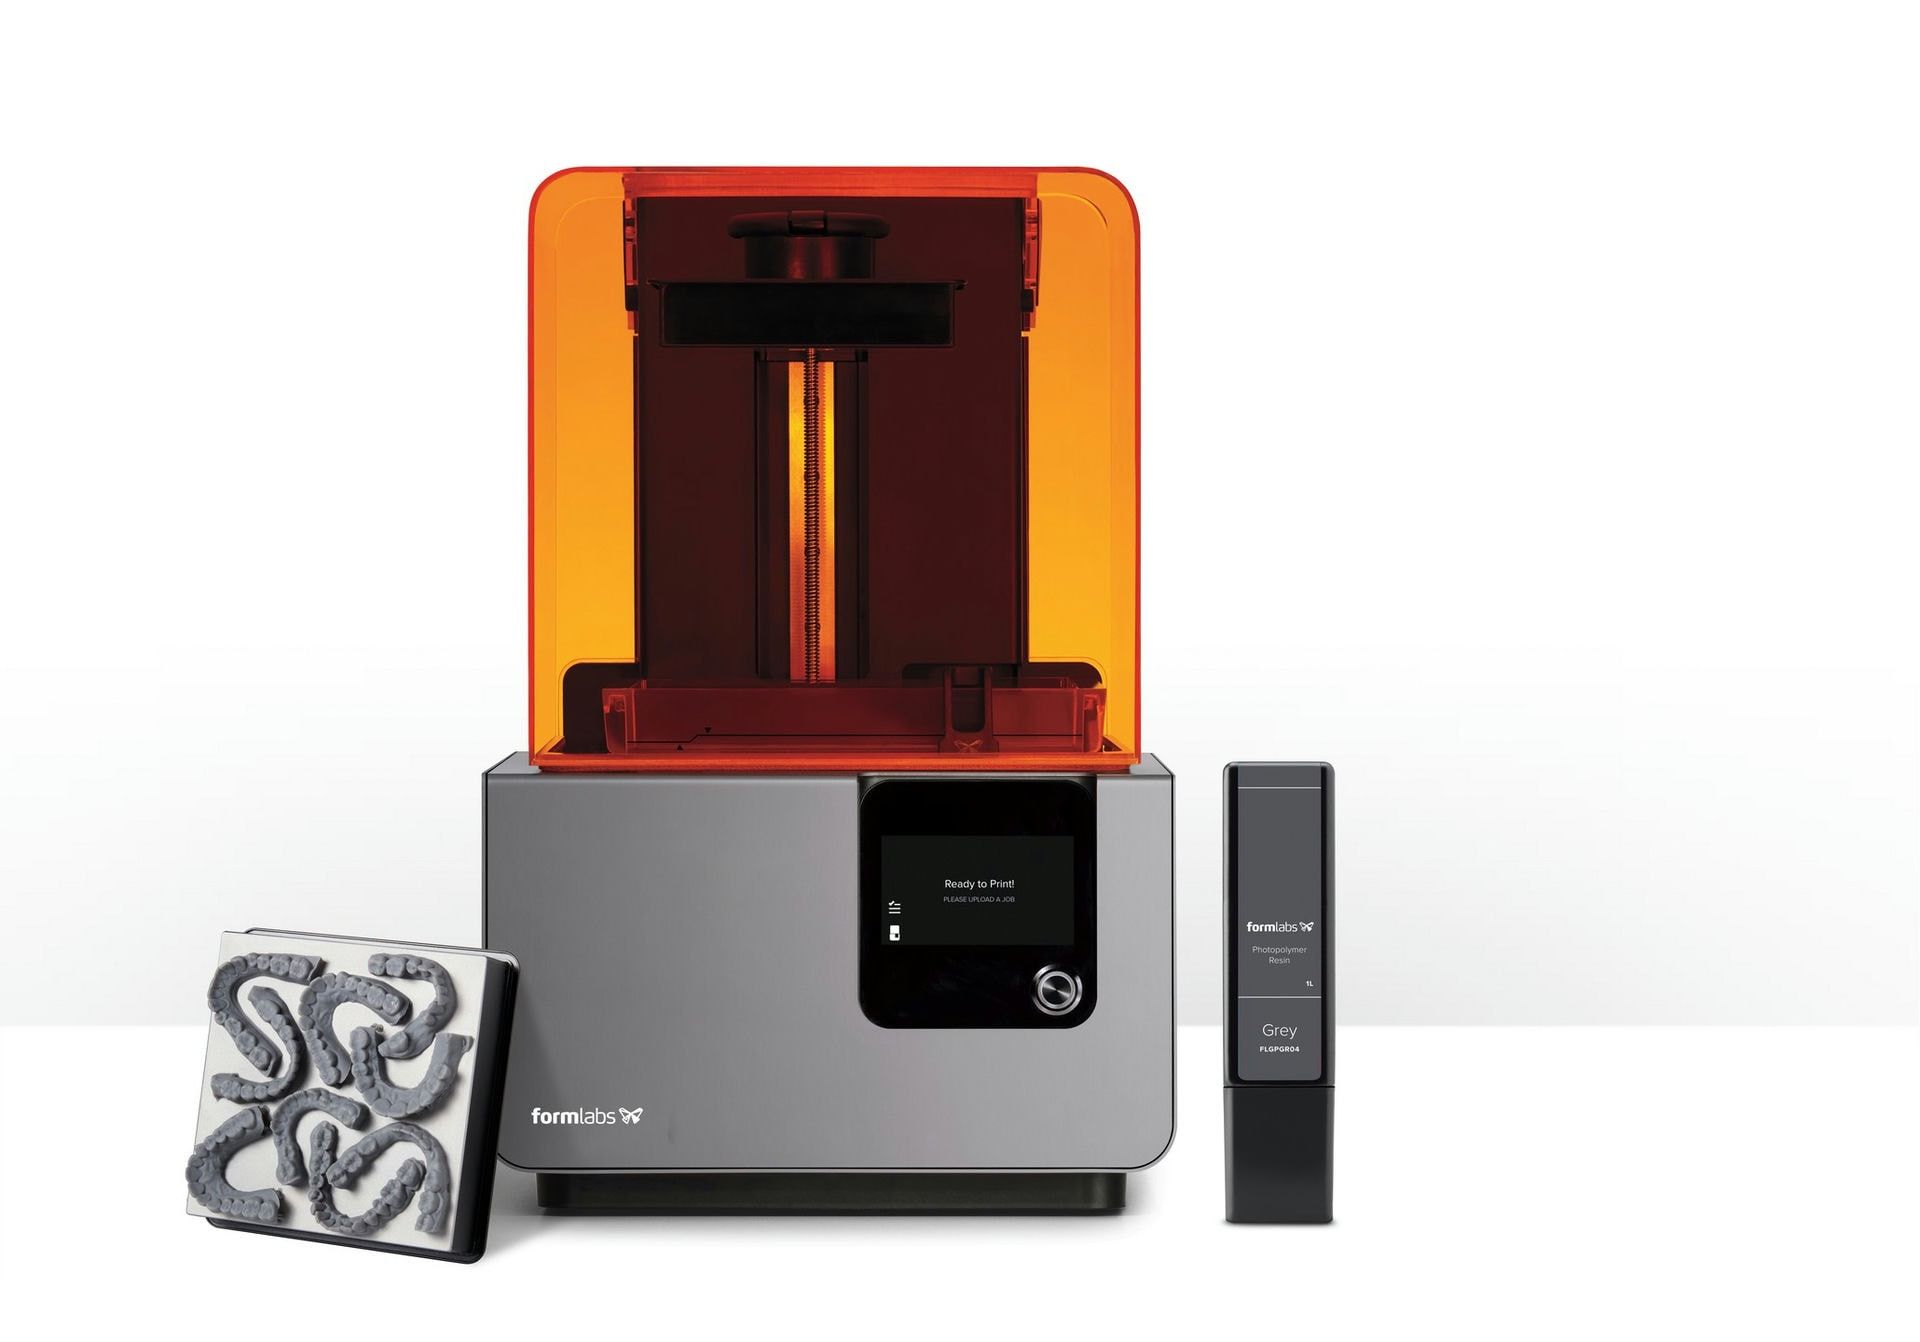 A Formlabs brand 3D printer.